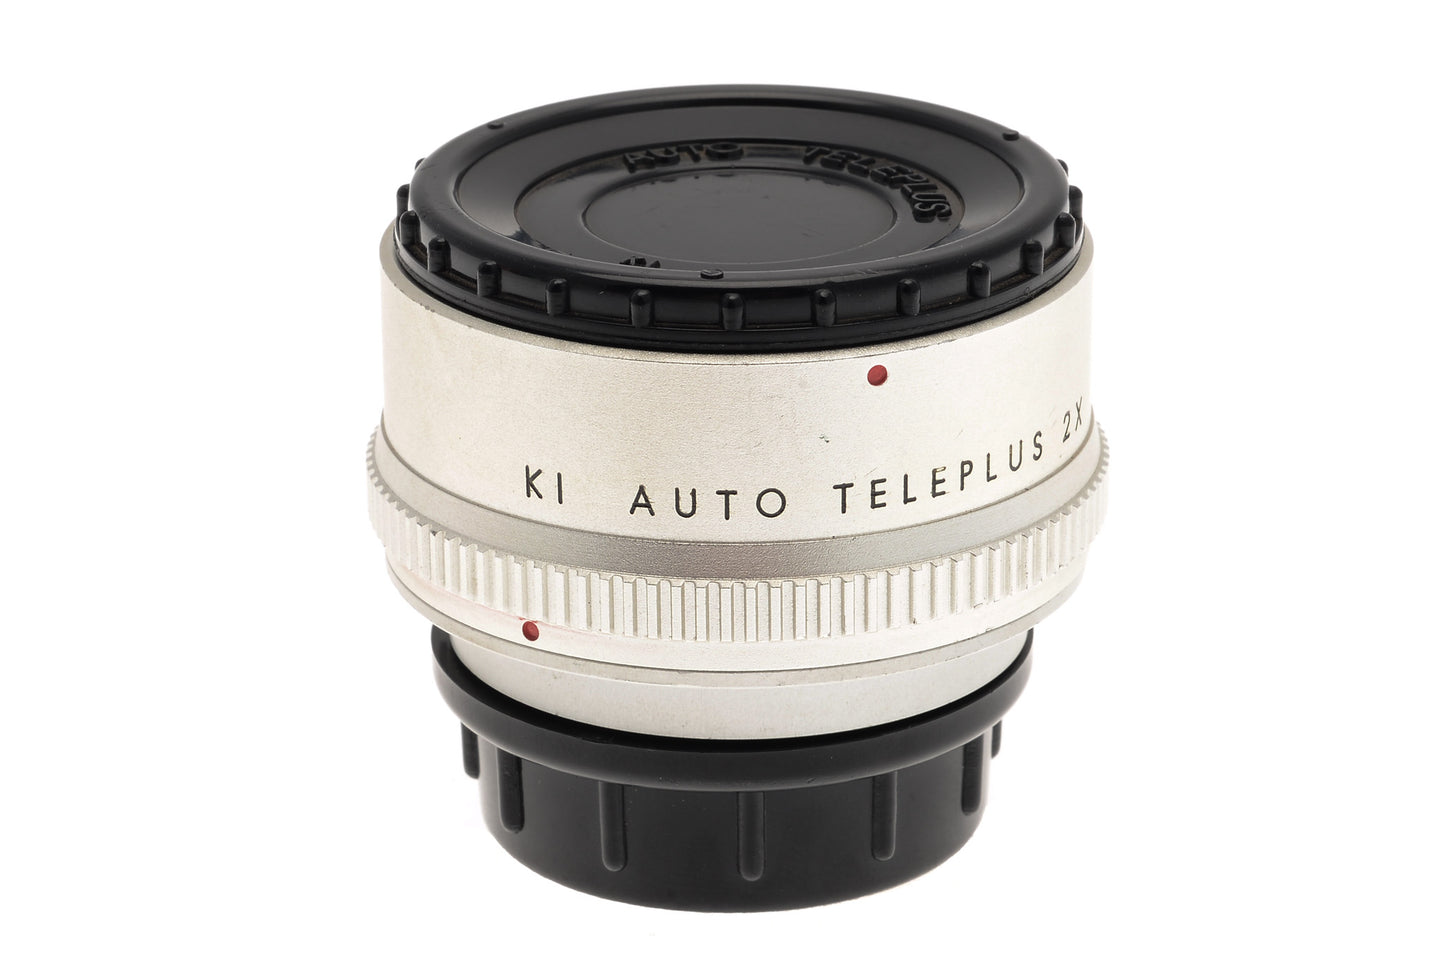 Generic K1 Auto Teleplus 2x Teleconverter for Kodak Retina Reflex - Accessory